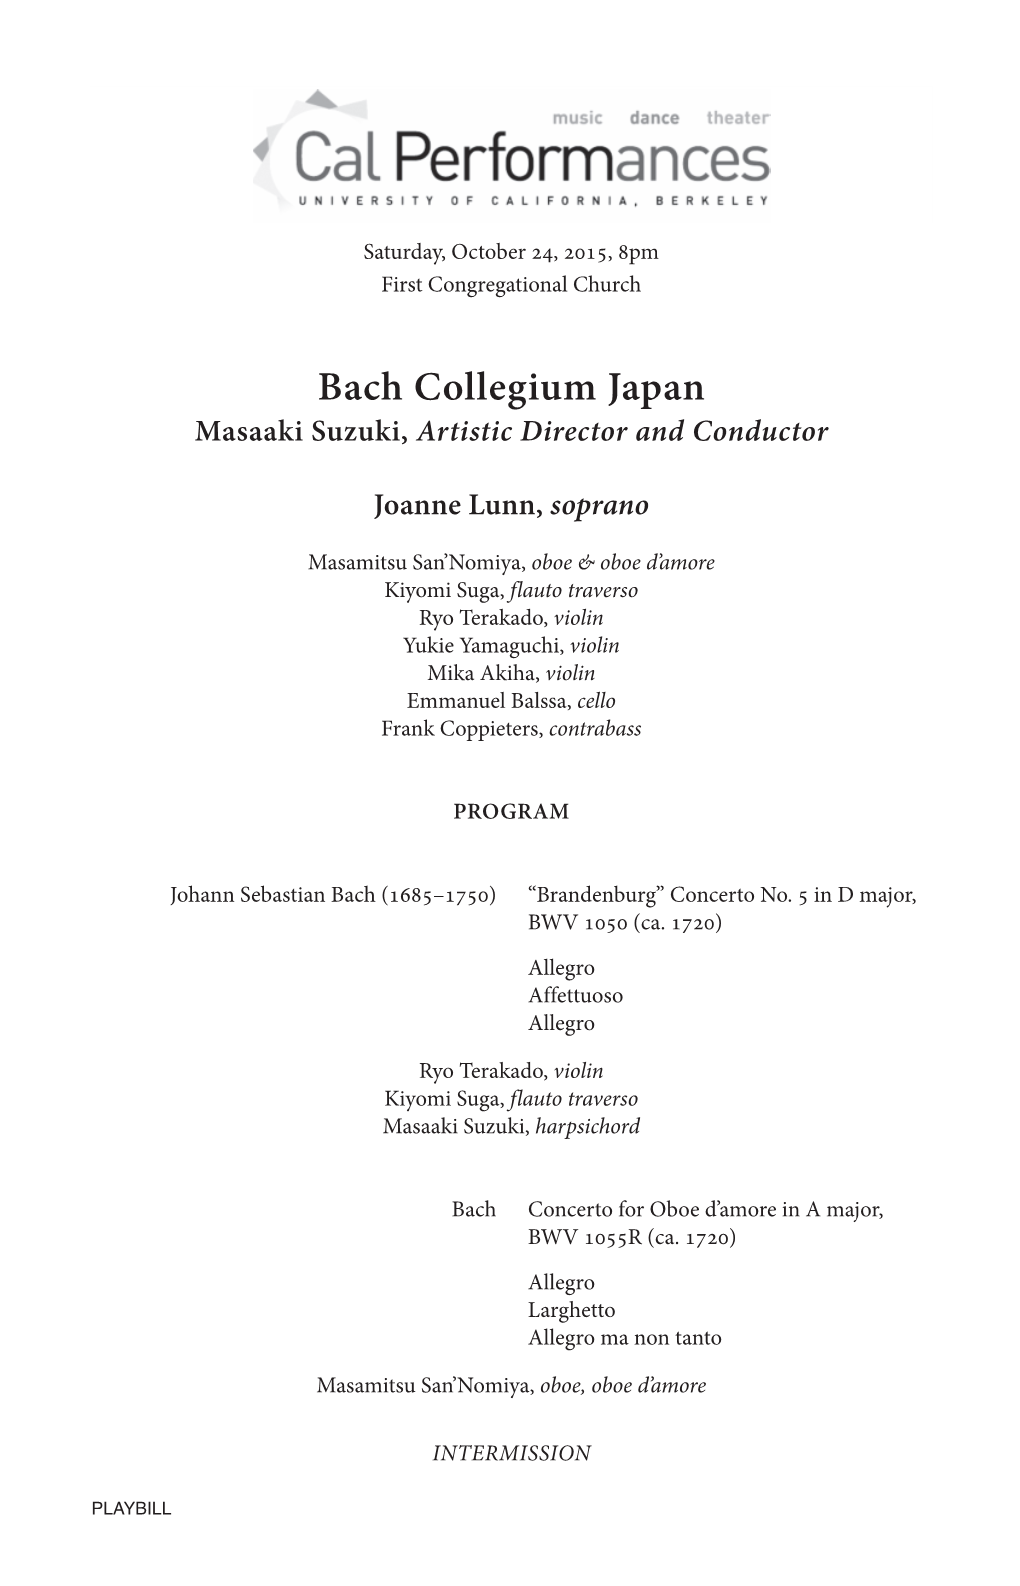 Bach Collegium Japan Masaaki Suzuki, Artistic Director and Conductor